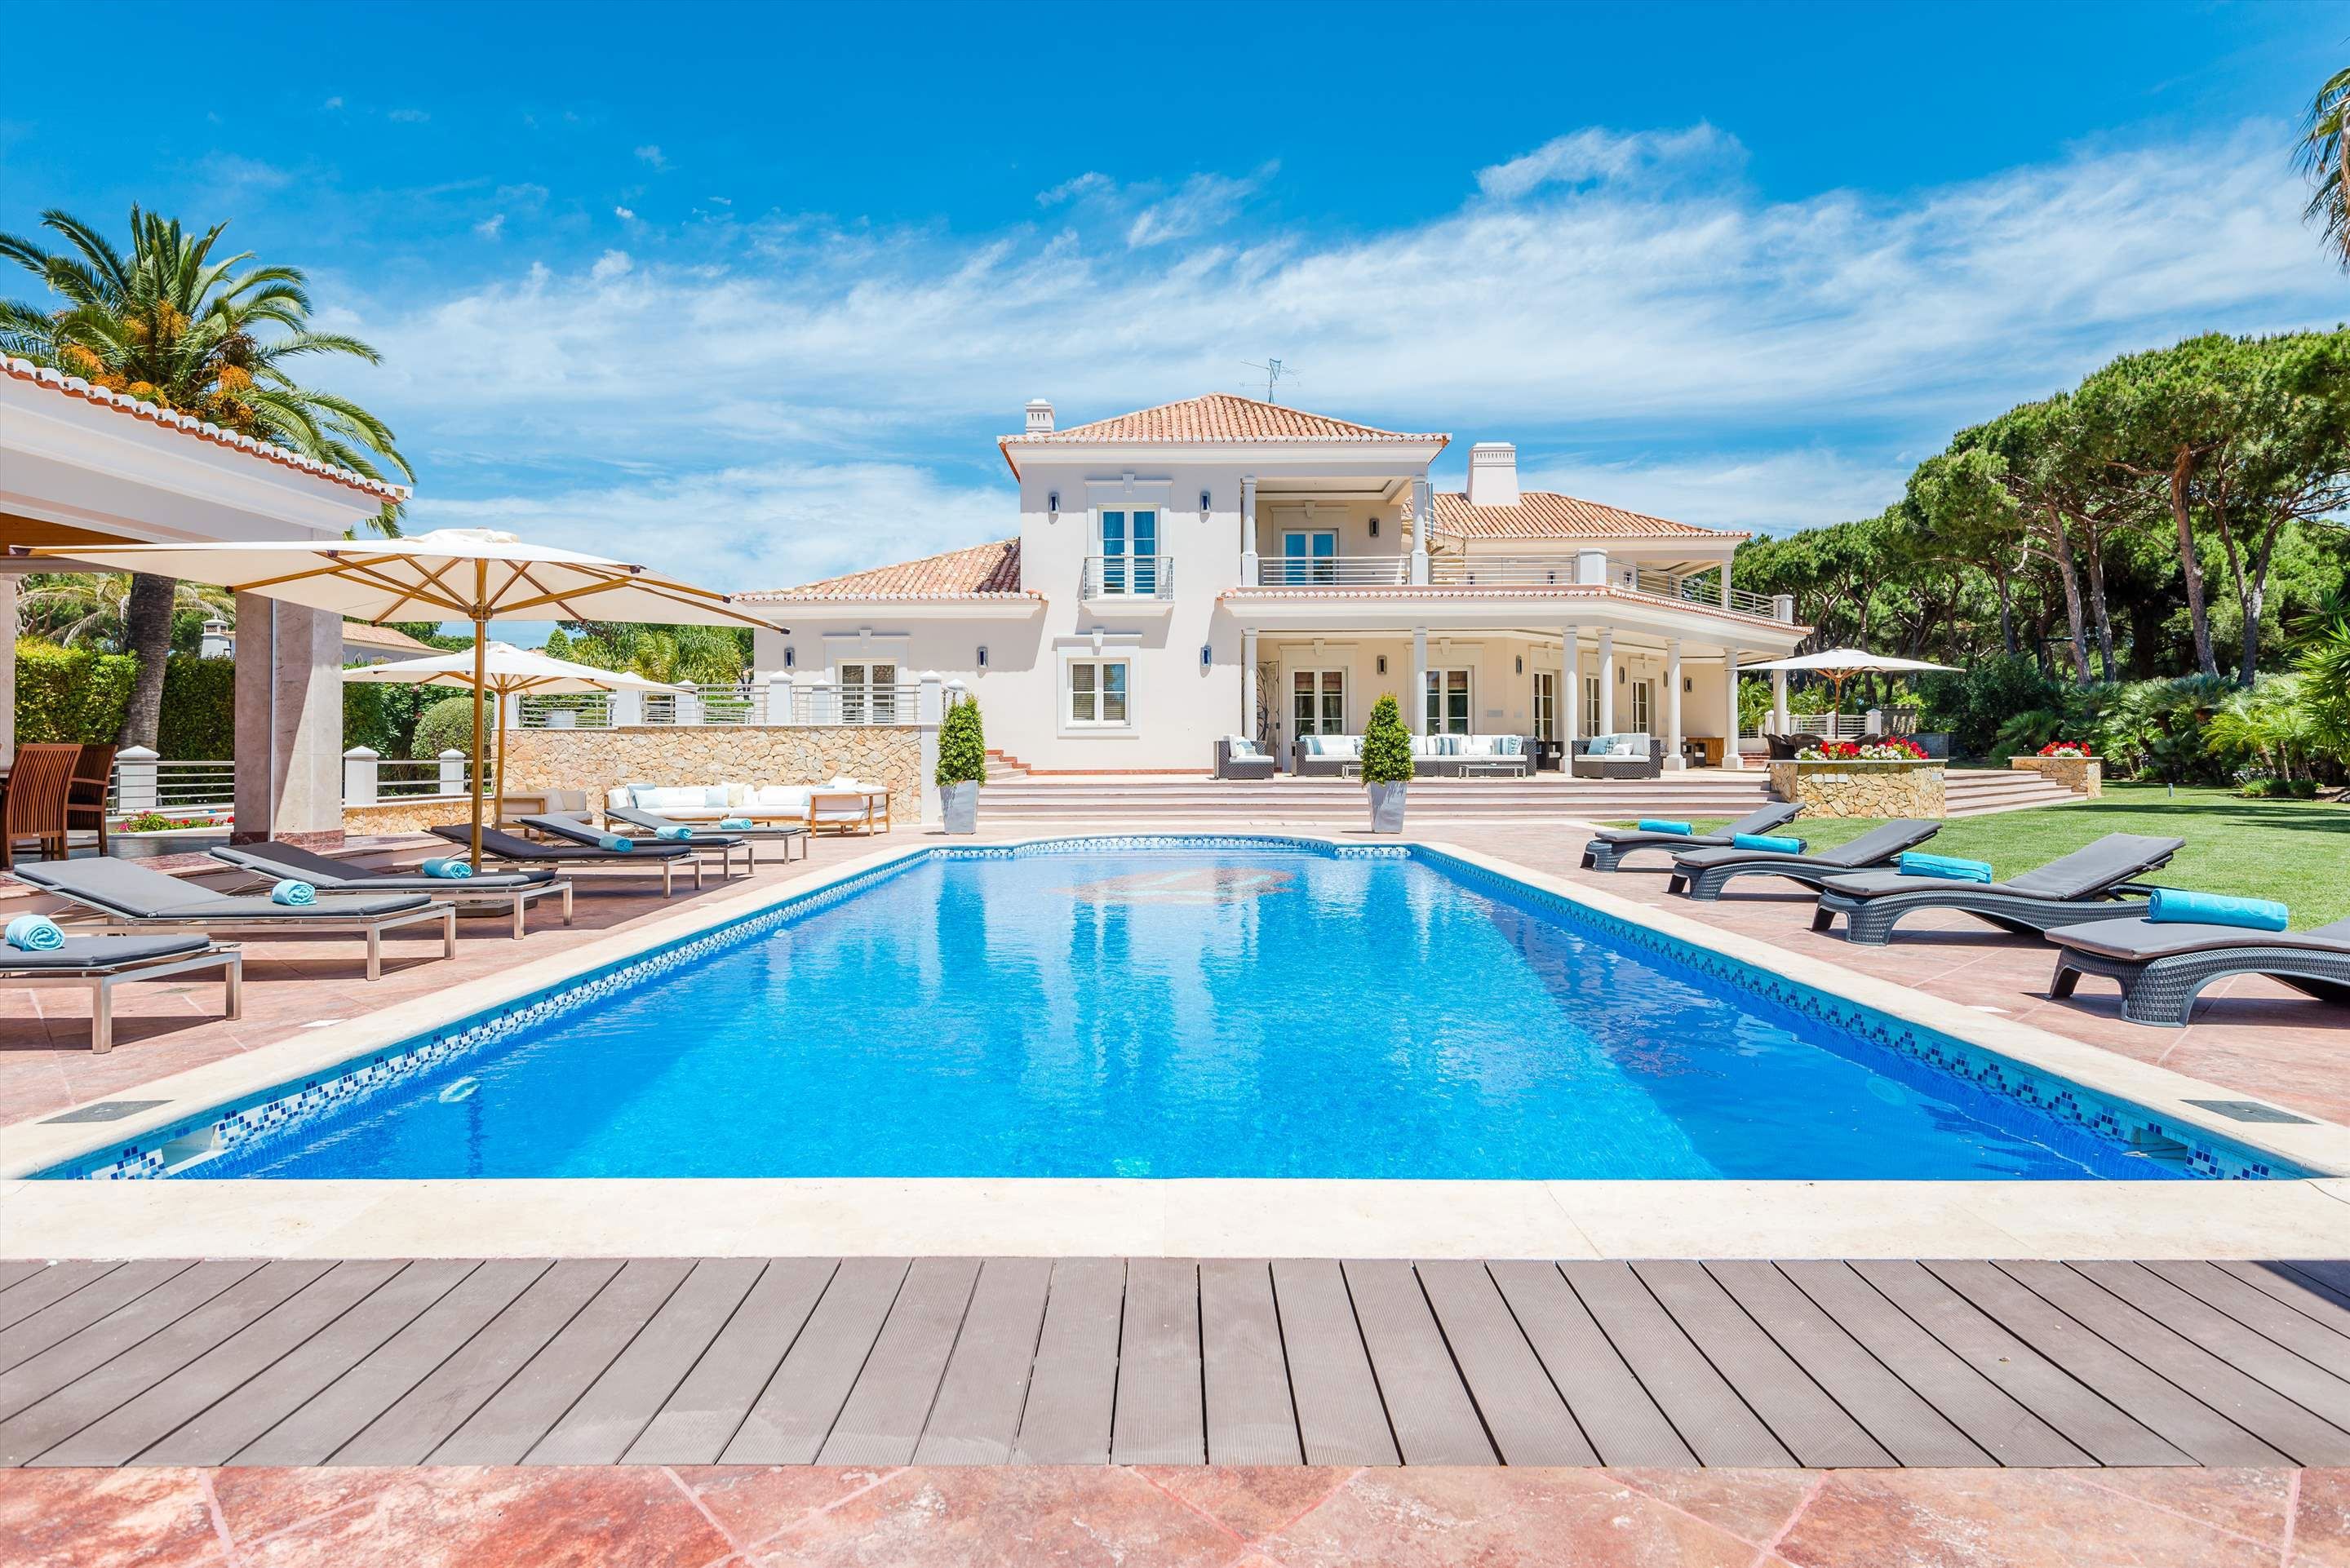 Professional photographs of Algarve villas